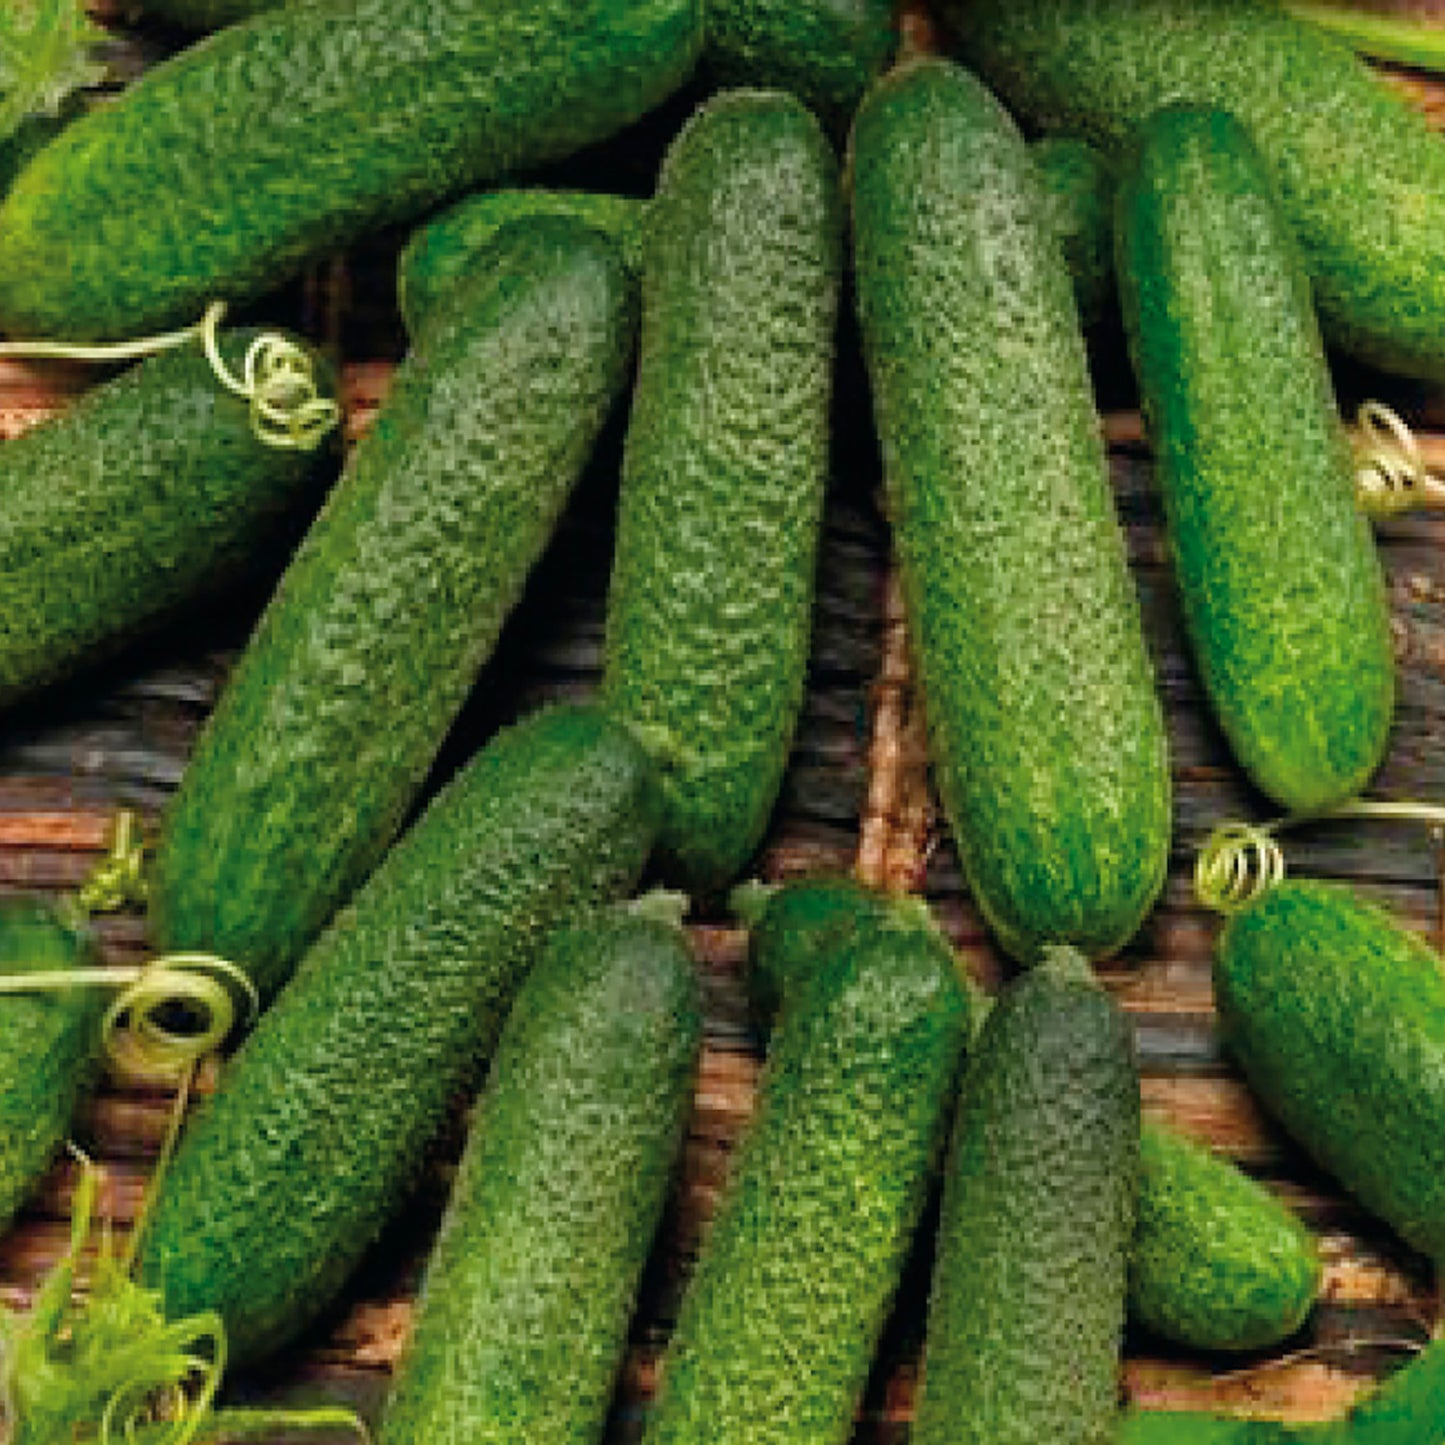 Cucumber Seeds, Corentine Hybrid